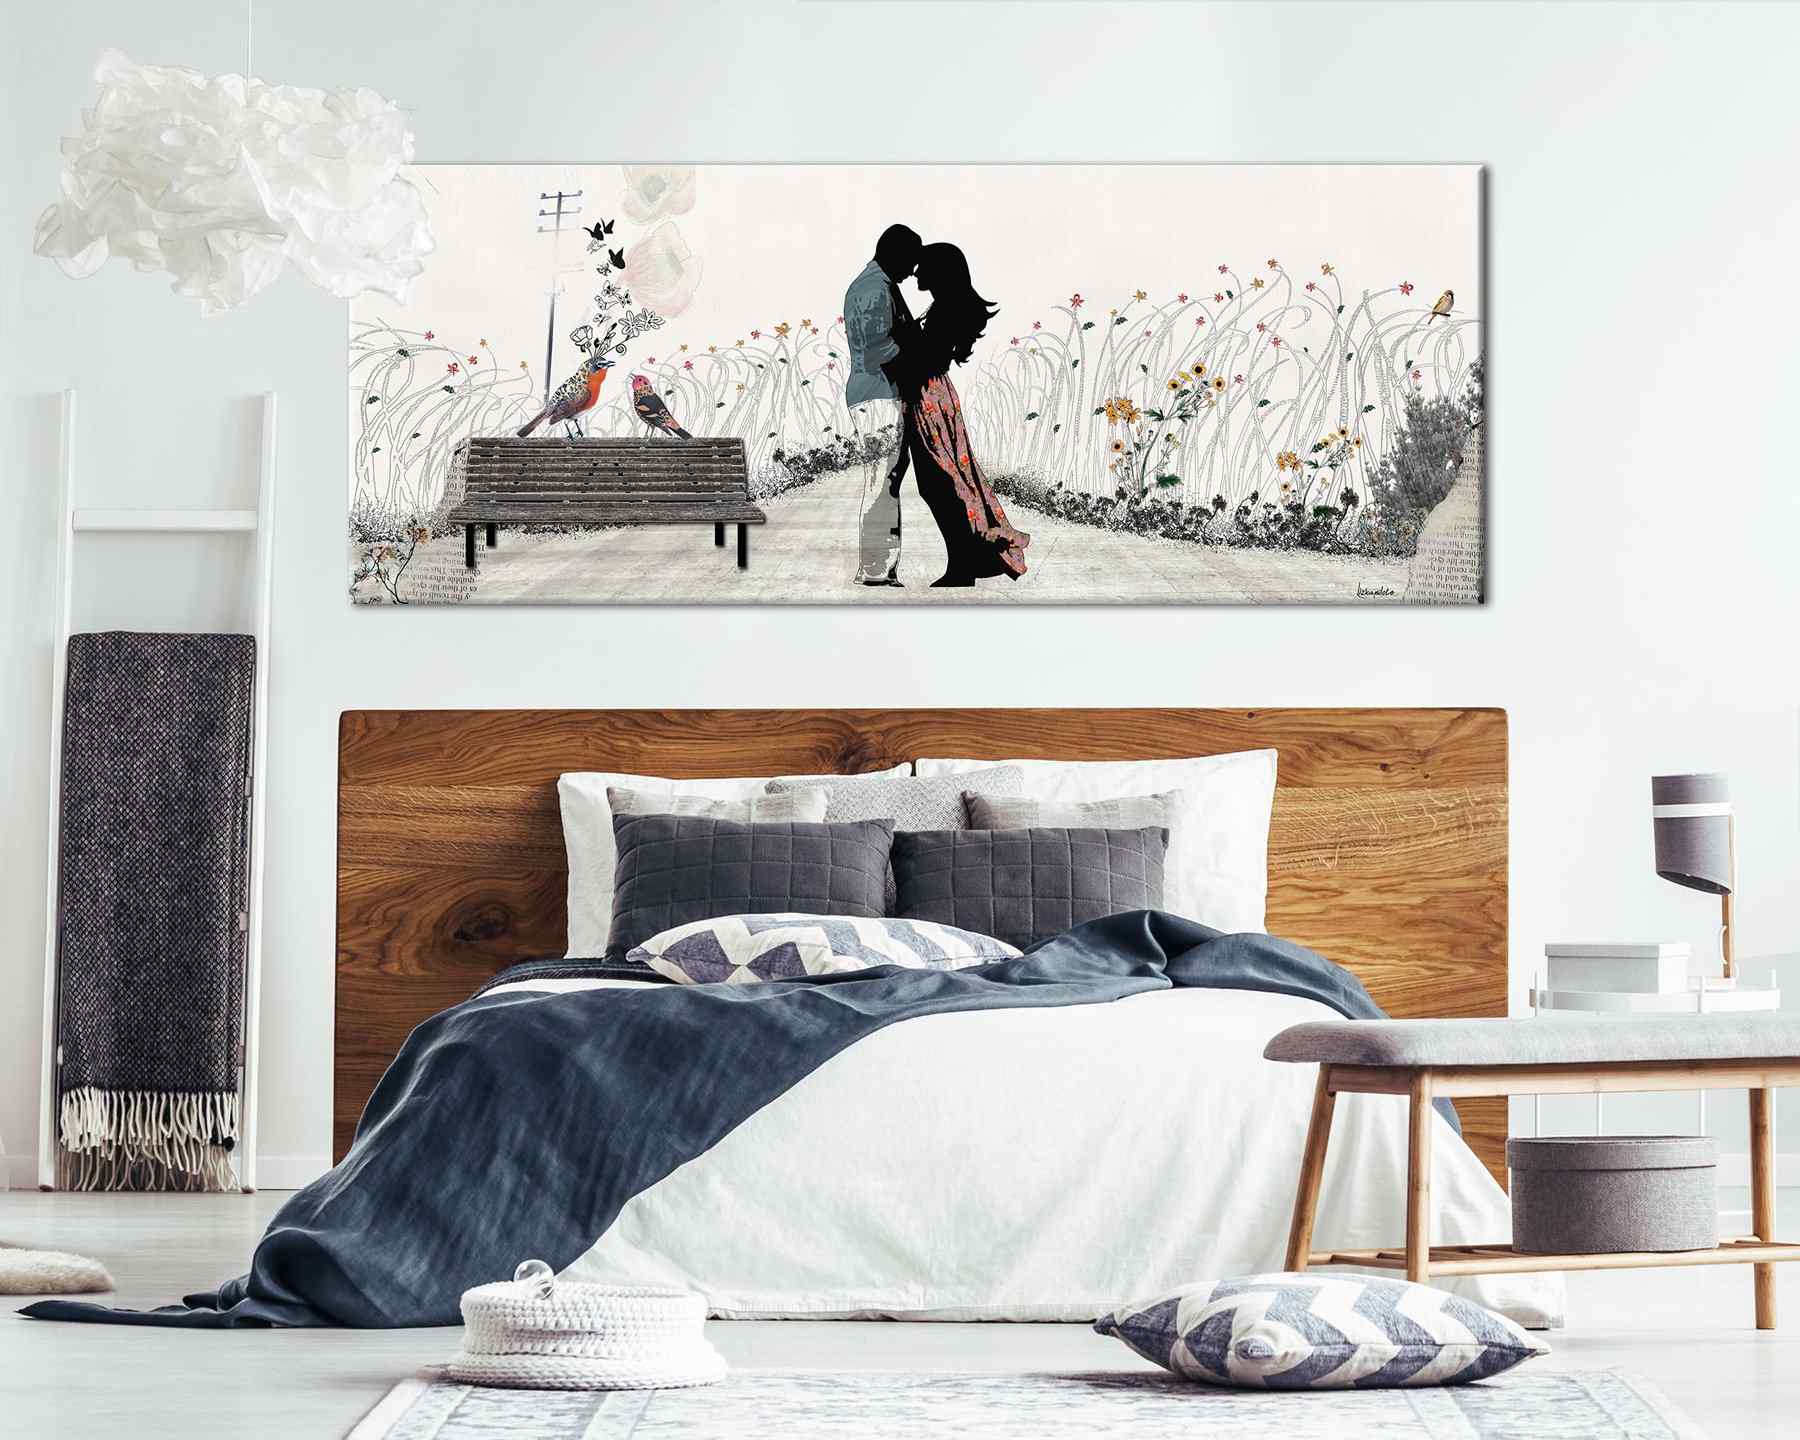 Most Beautiful Couple Bedroom Wallpaper Designs